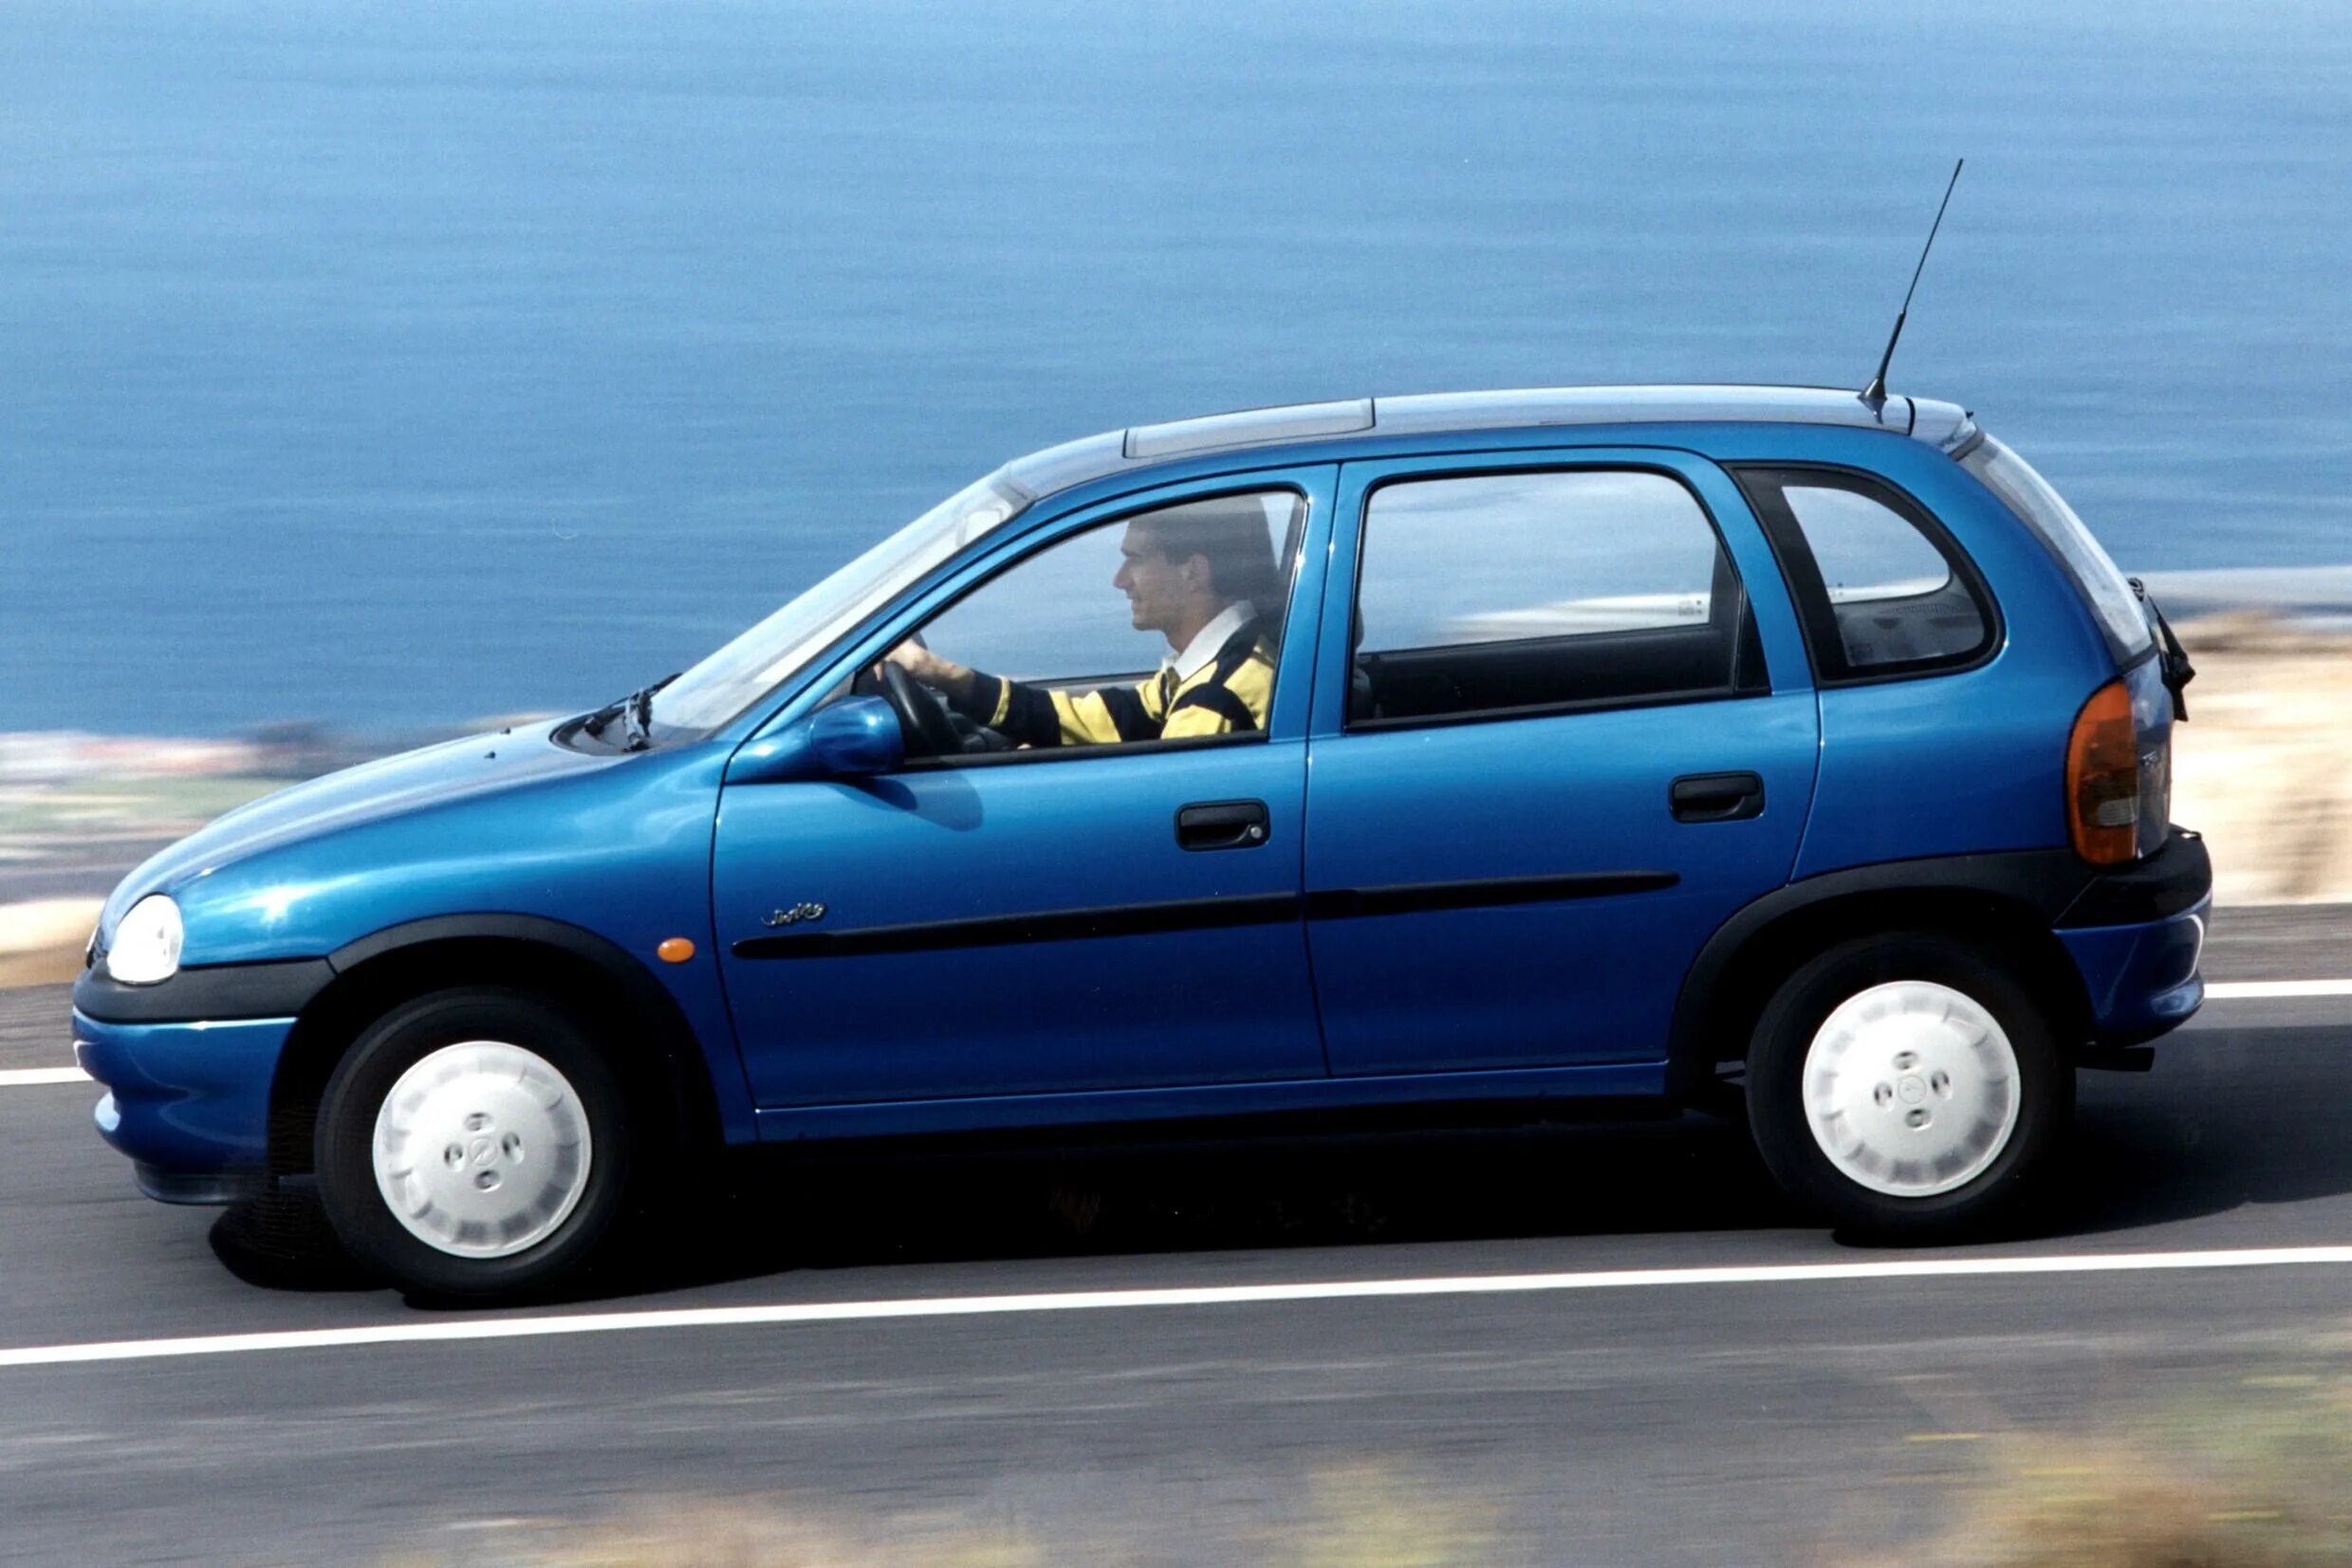 Opel Corsa 1997. Opel Corsa b 1997. Опель Корса 1997 года. Opel Corsa 1996. Куплю опель корса б